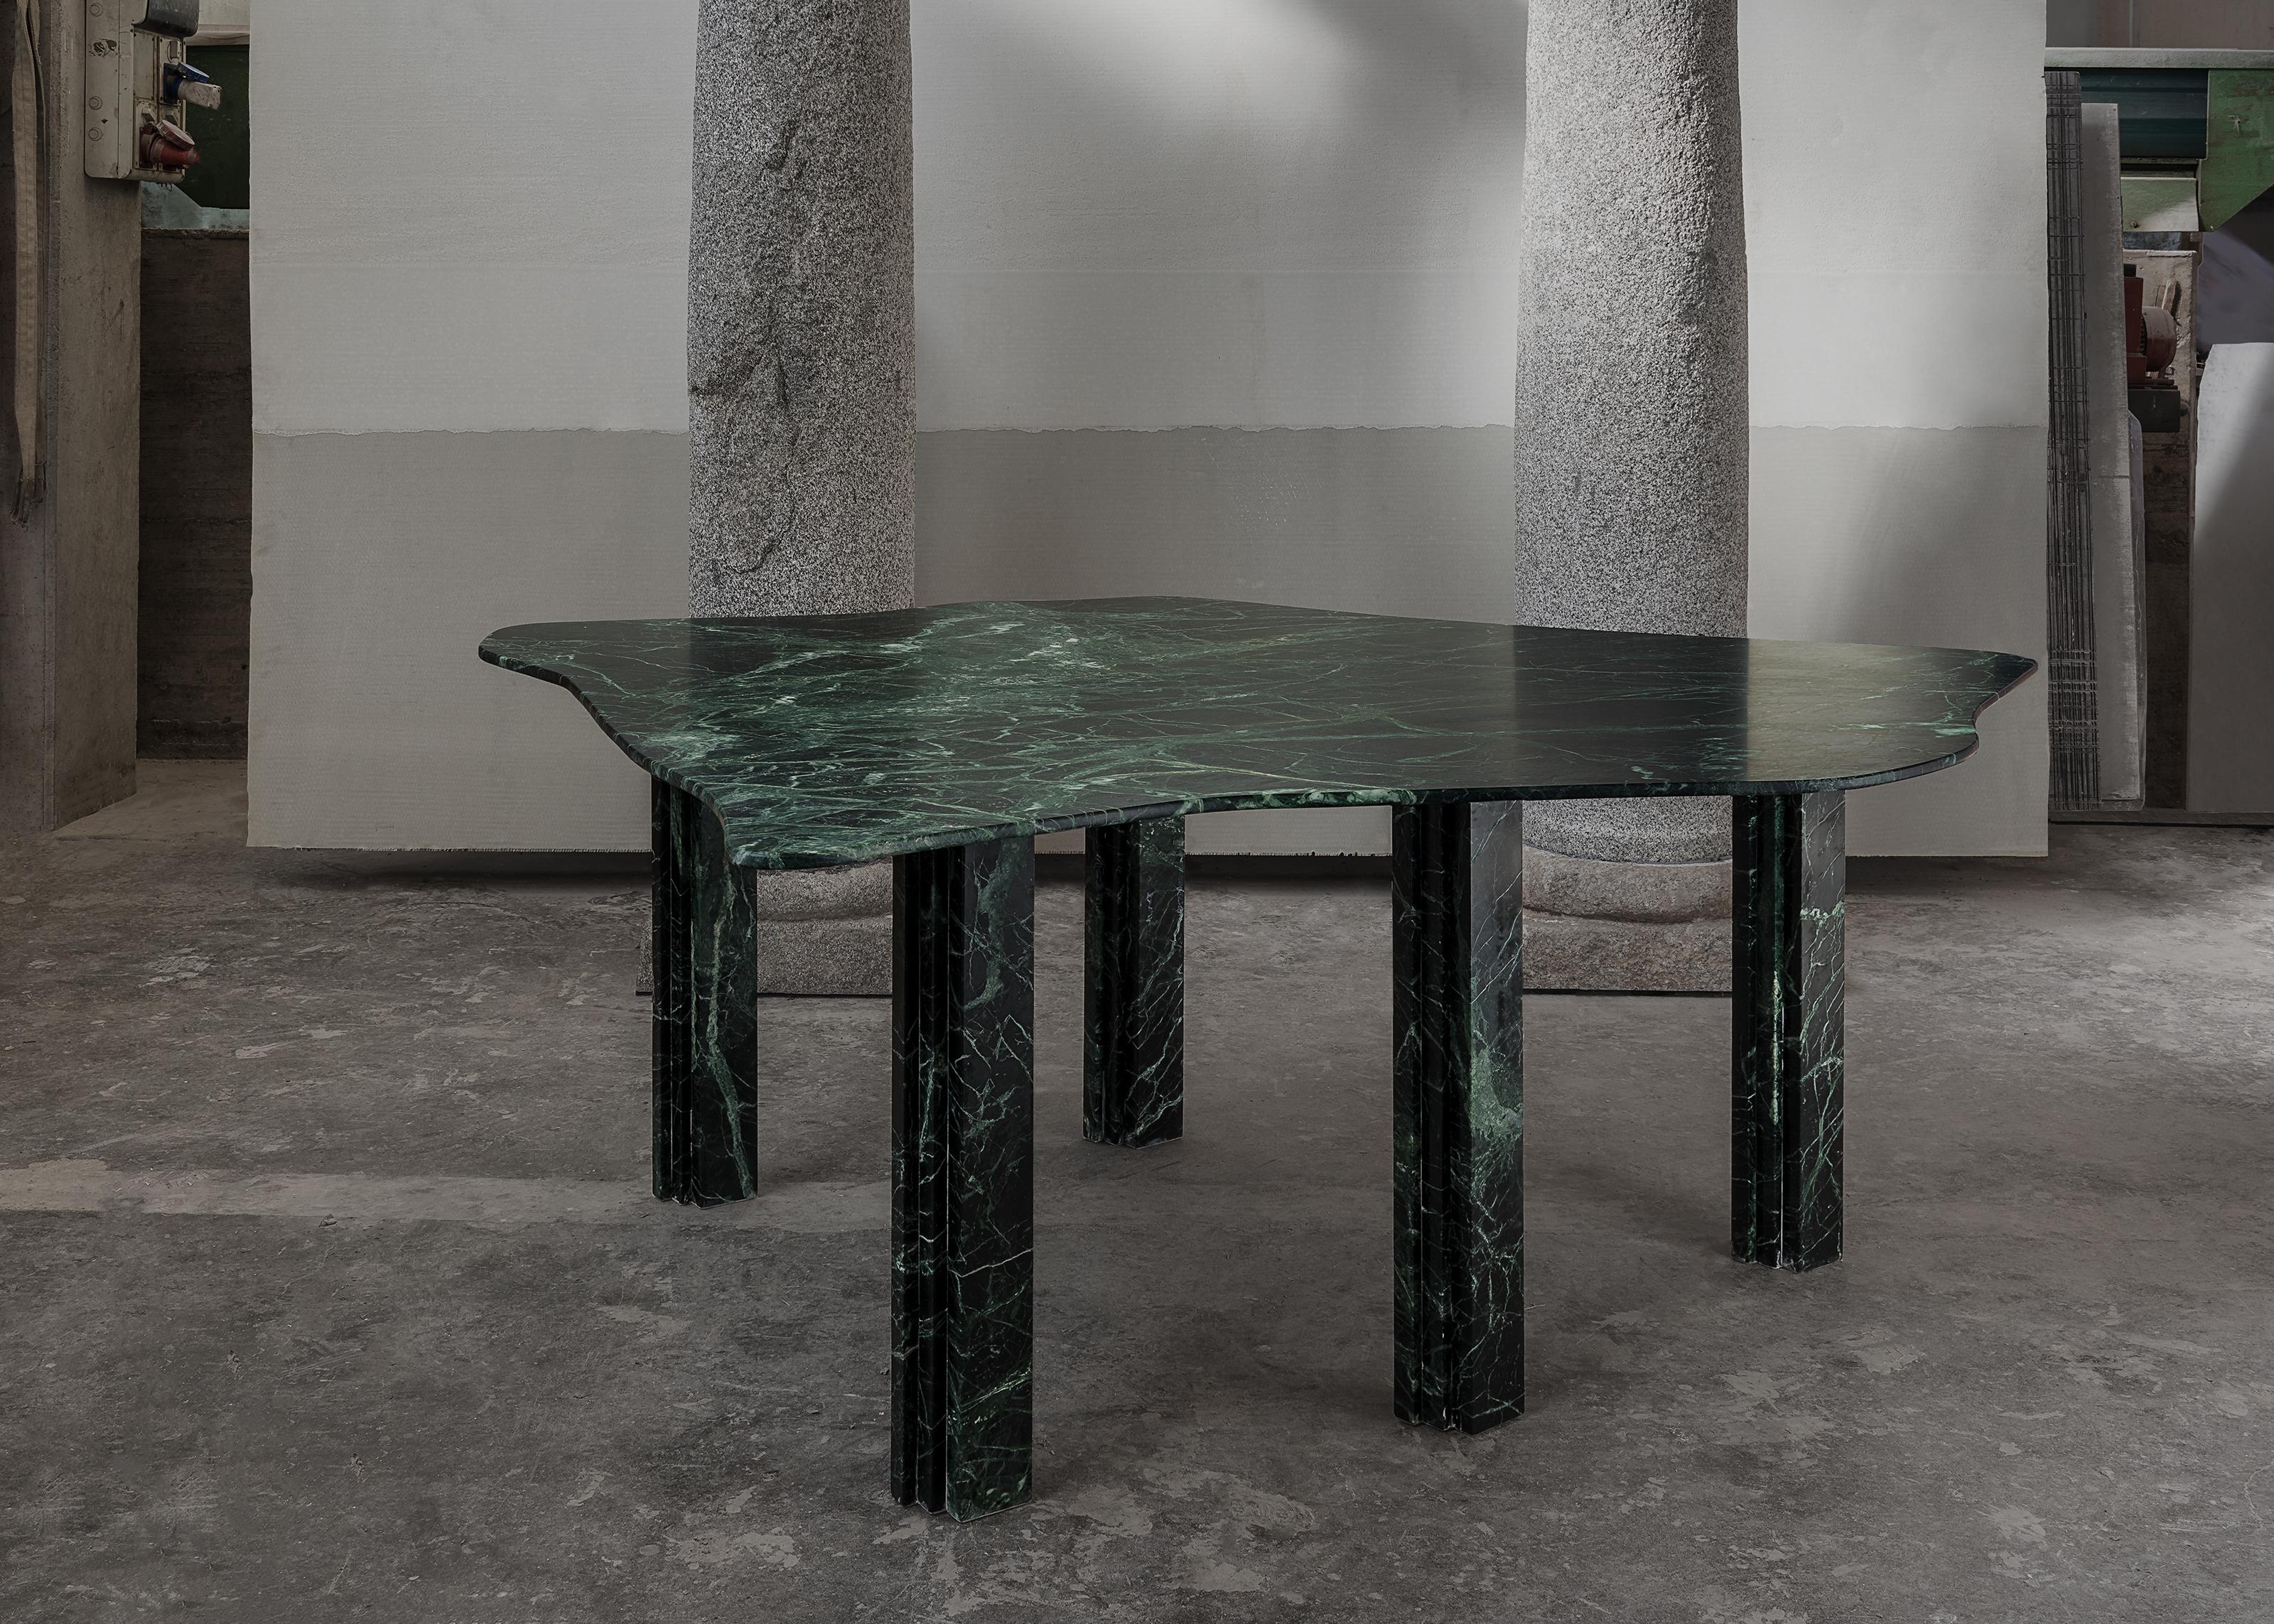 No-Thin Sculptural Green Marble Coffee Table by Lorenzo Bini 1